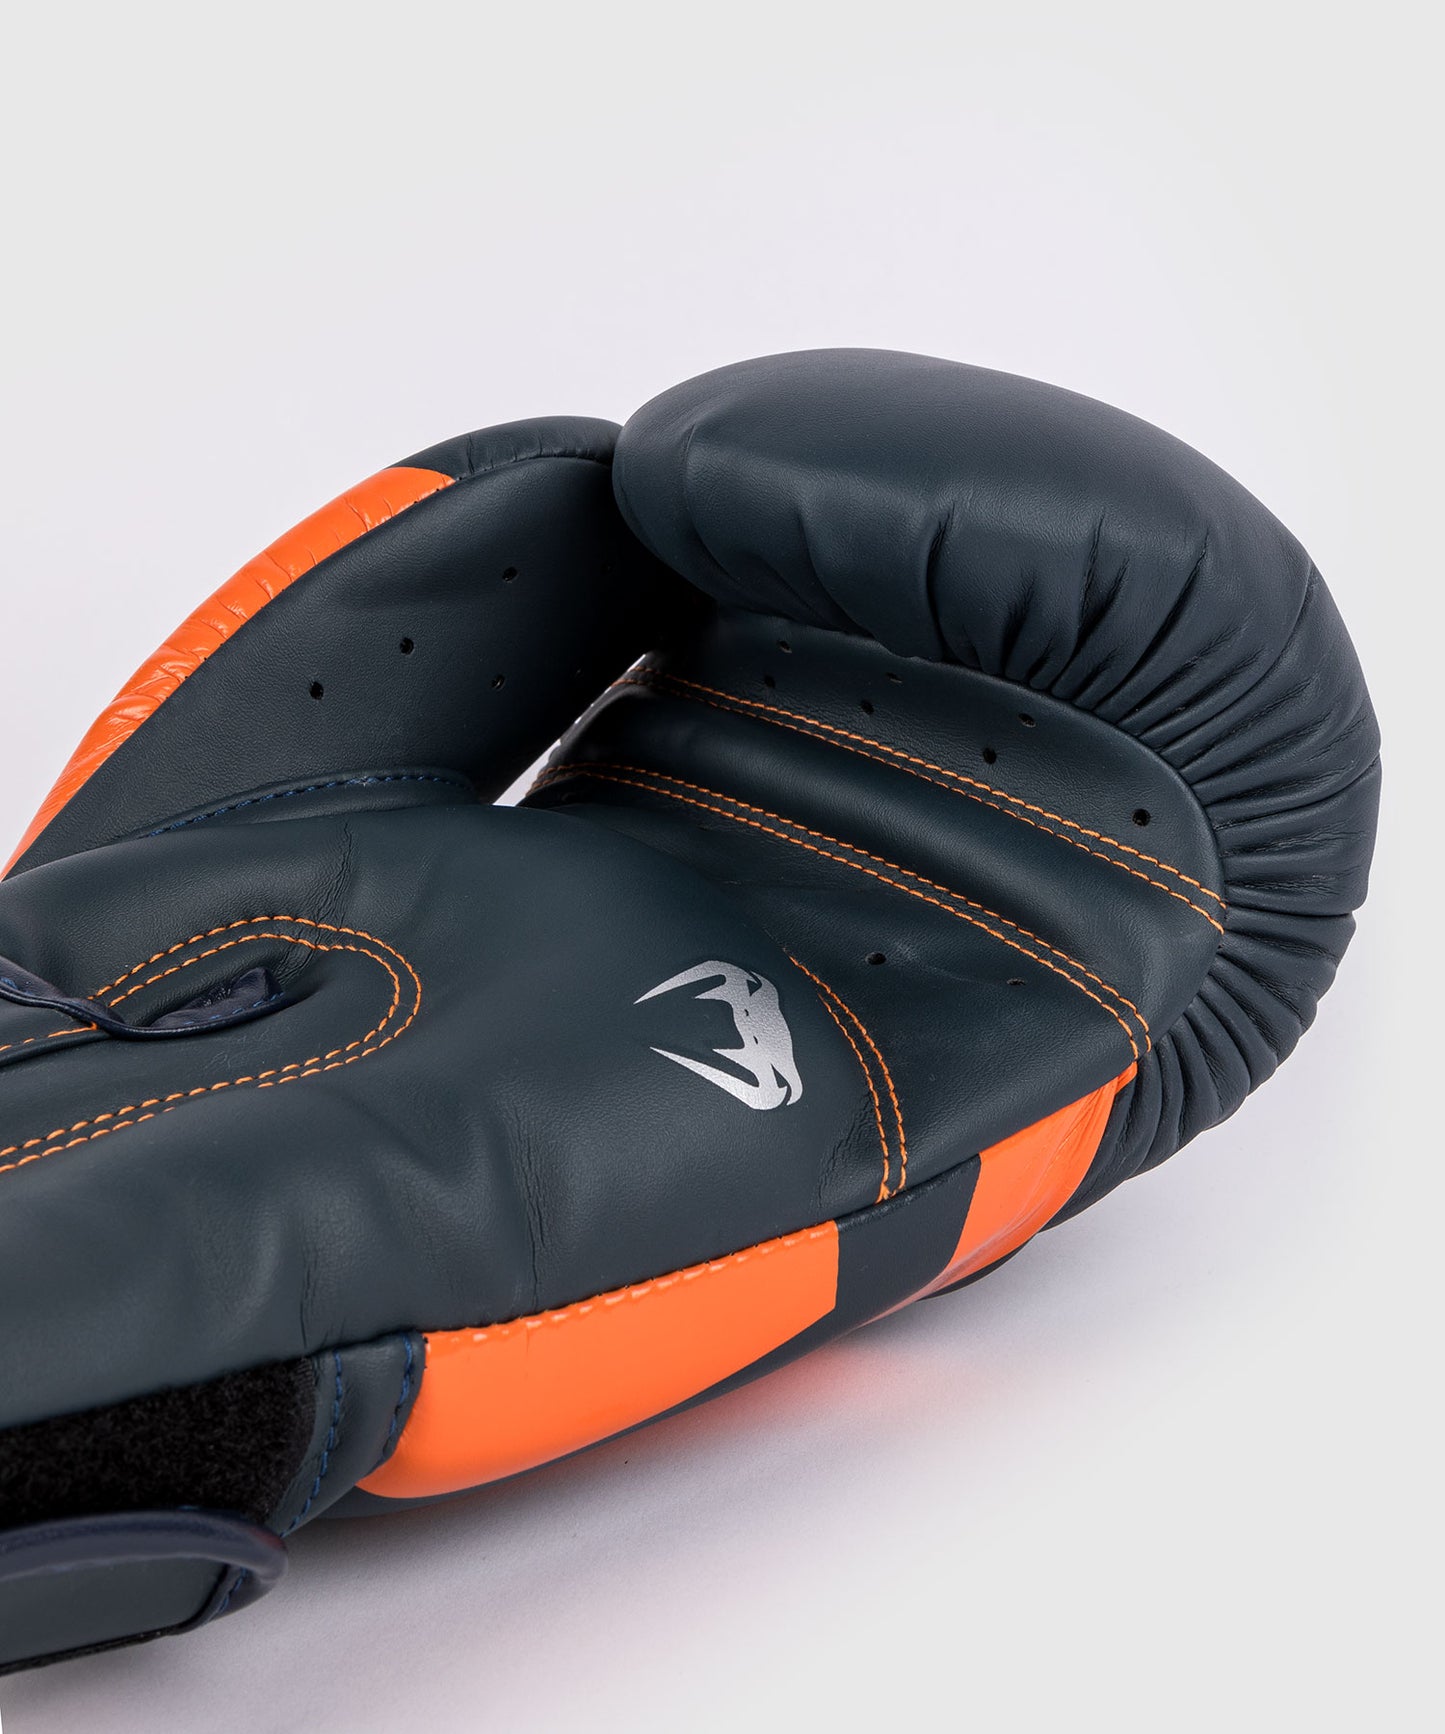 Venum Elite Boxing Gloves - Navy/Silver/Orange